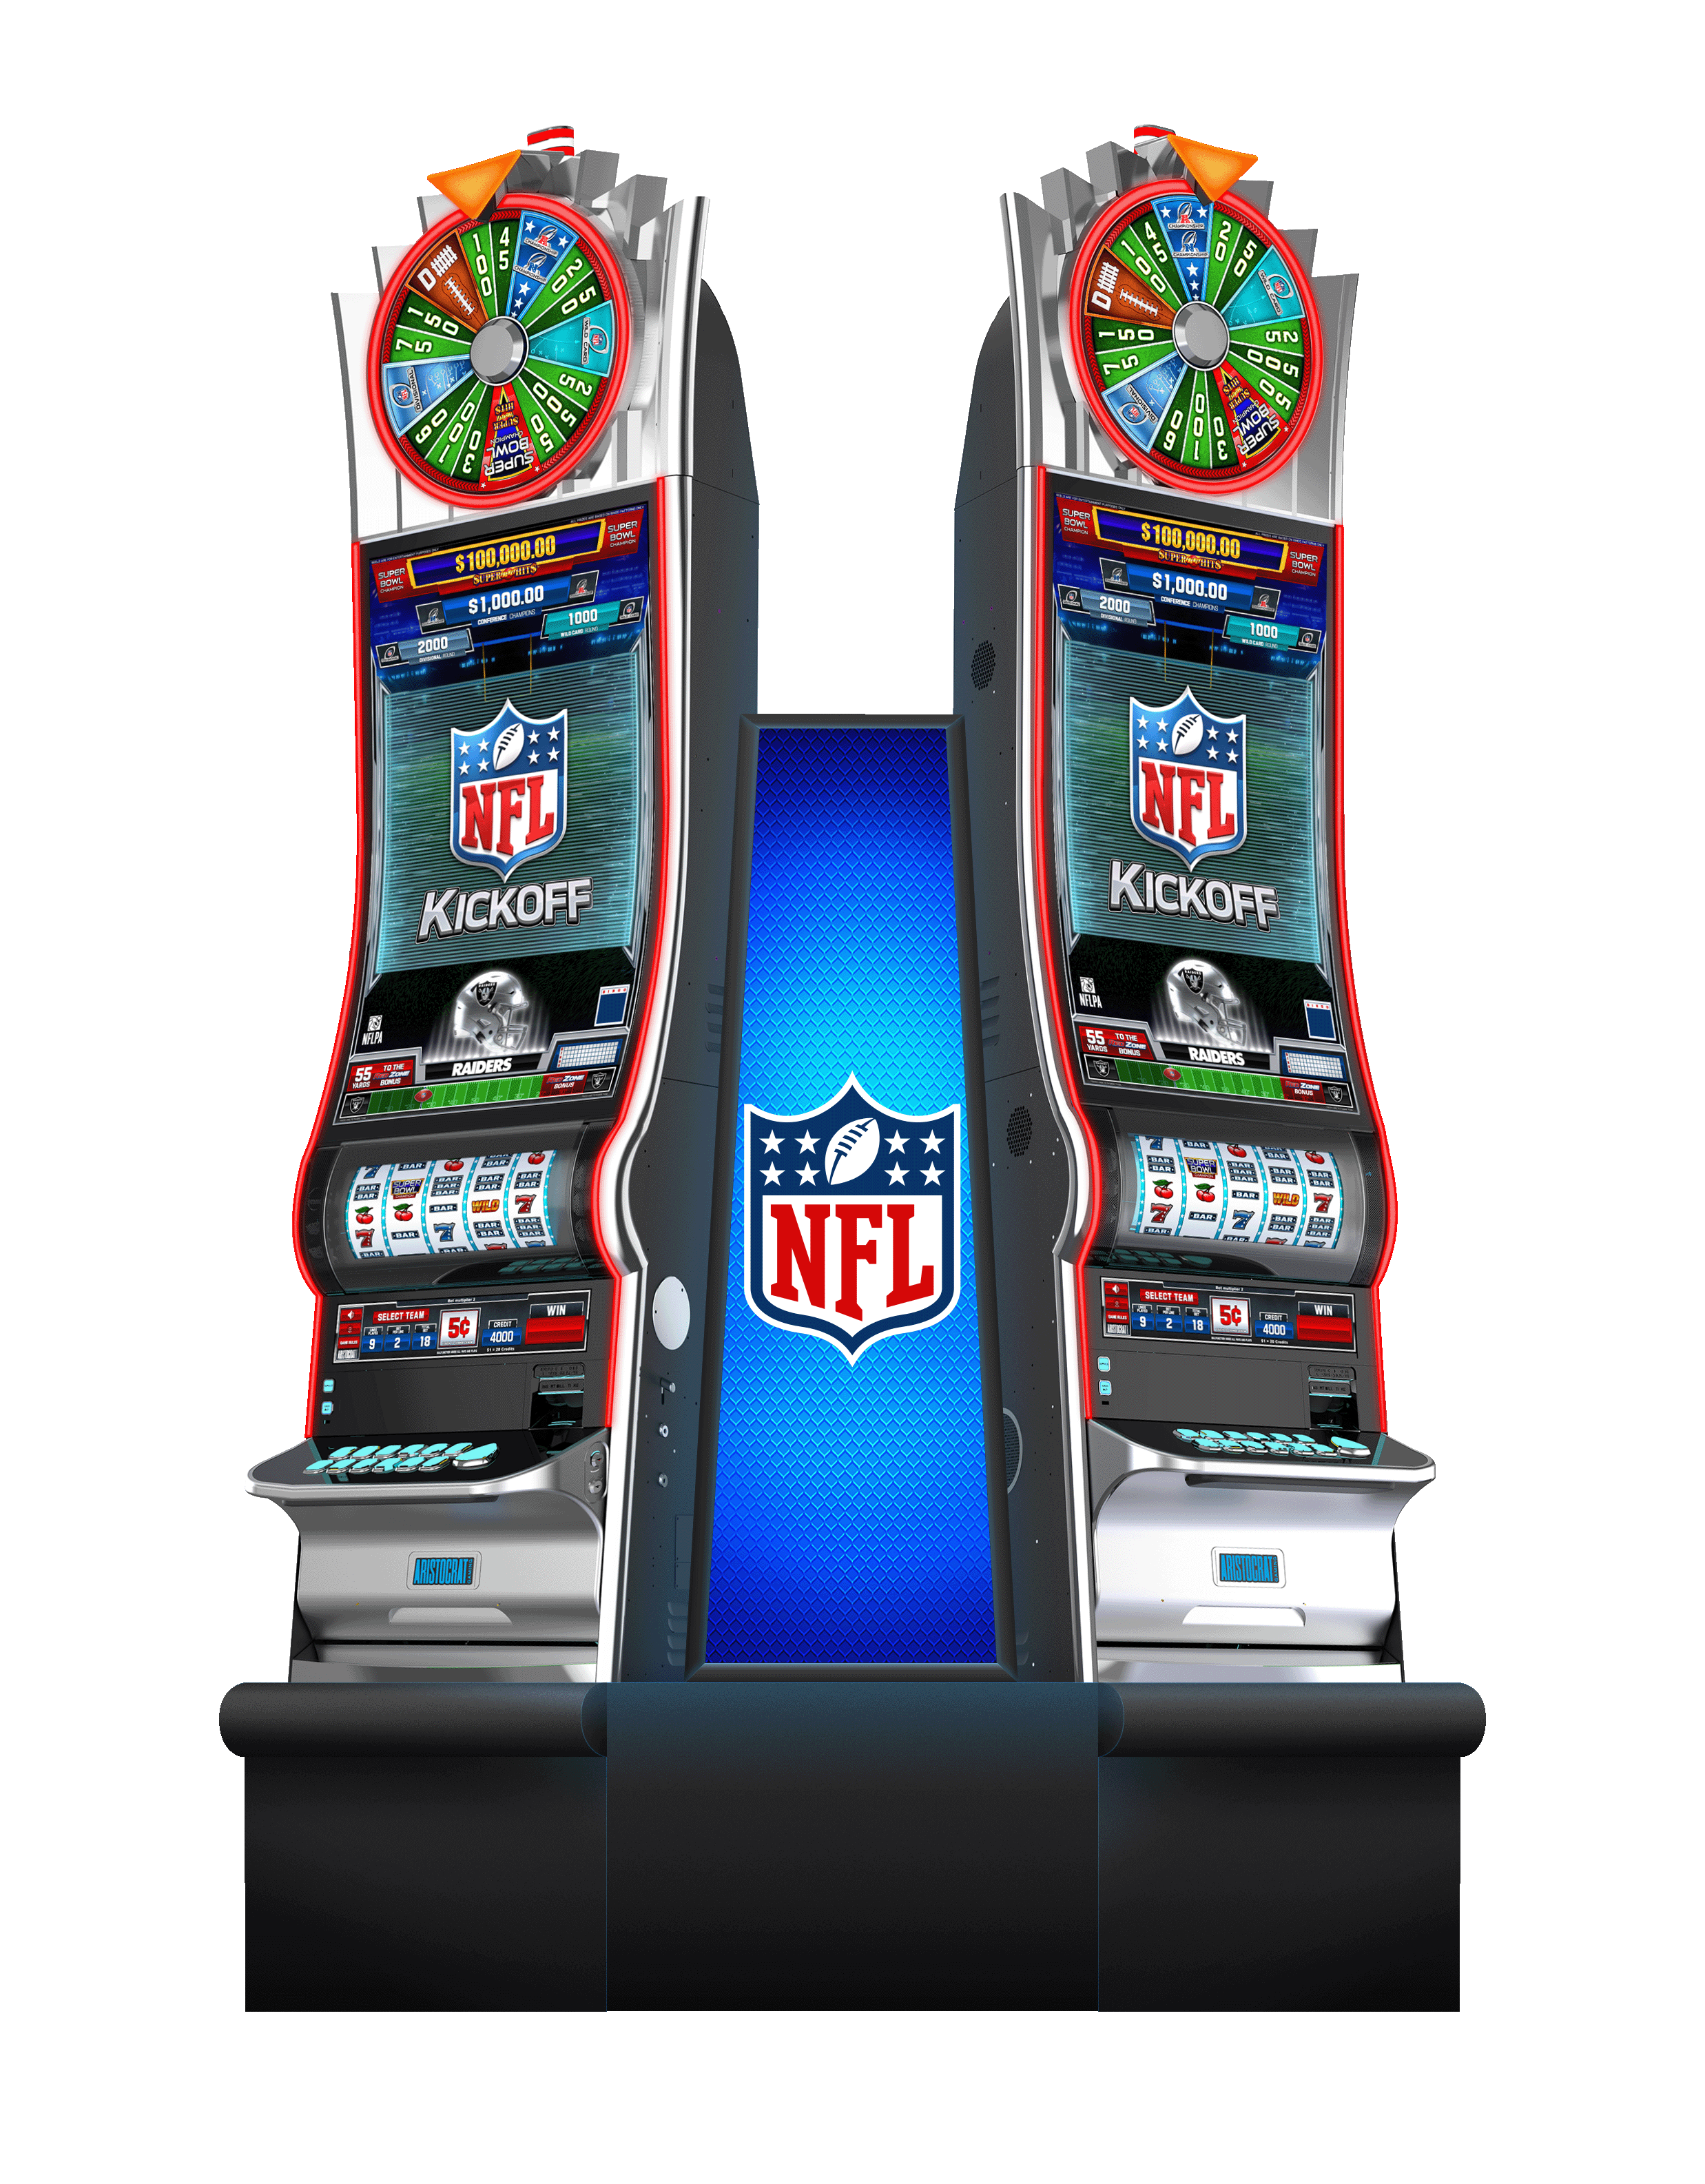 NFL-themed slots debut on Las Vegas casino floors